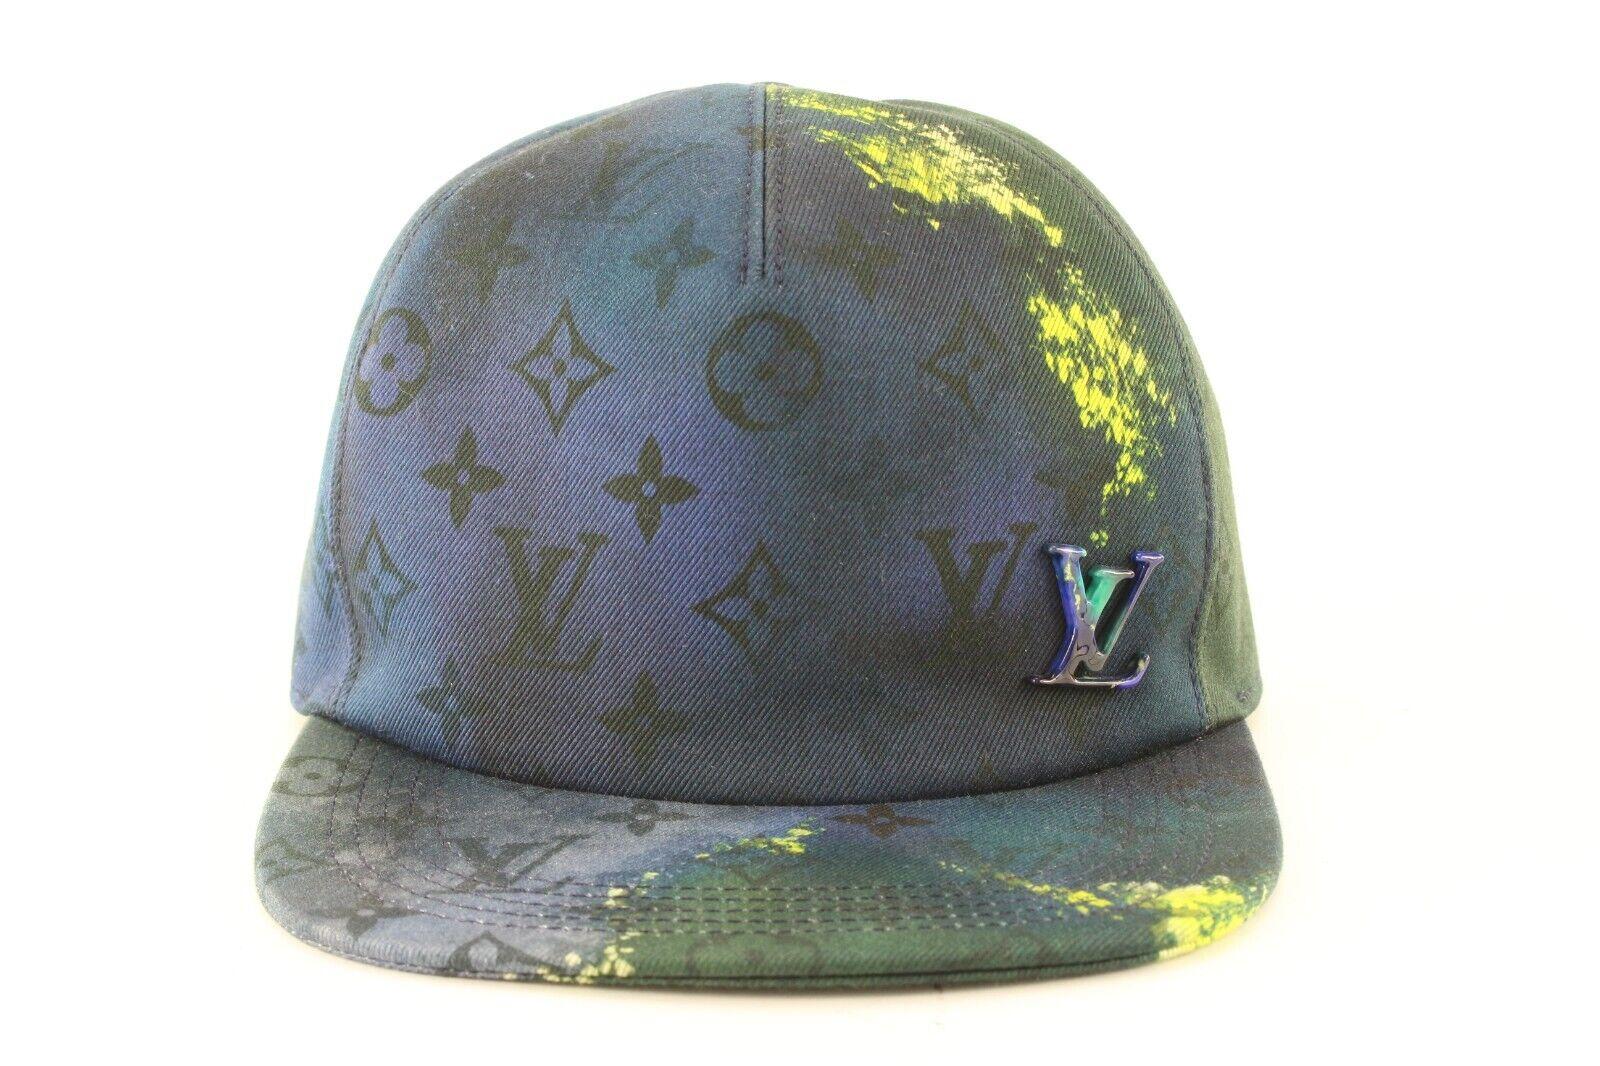 Louis Vuitton Rare Limited Baseball Cap Hat Tye Dye Monogram 5LK0427 7